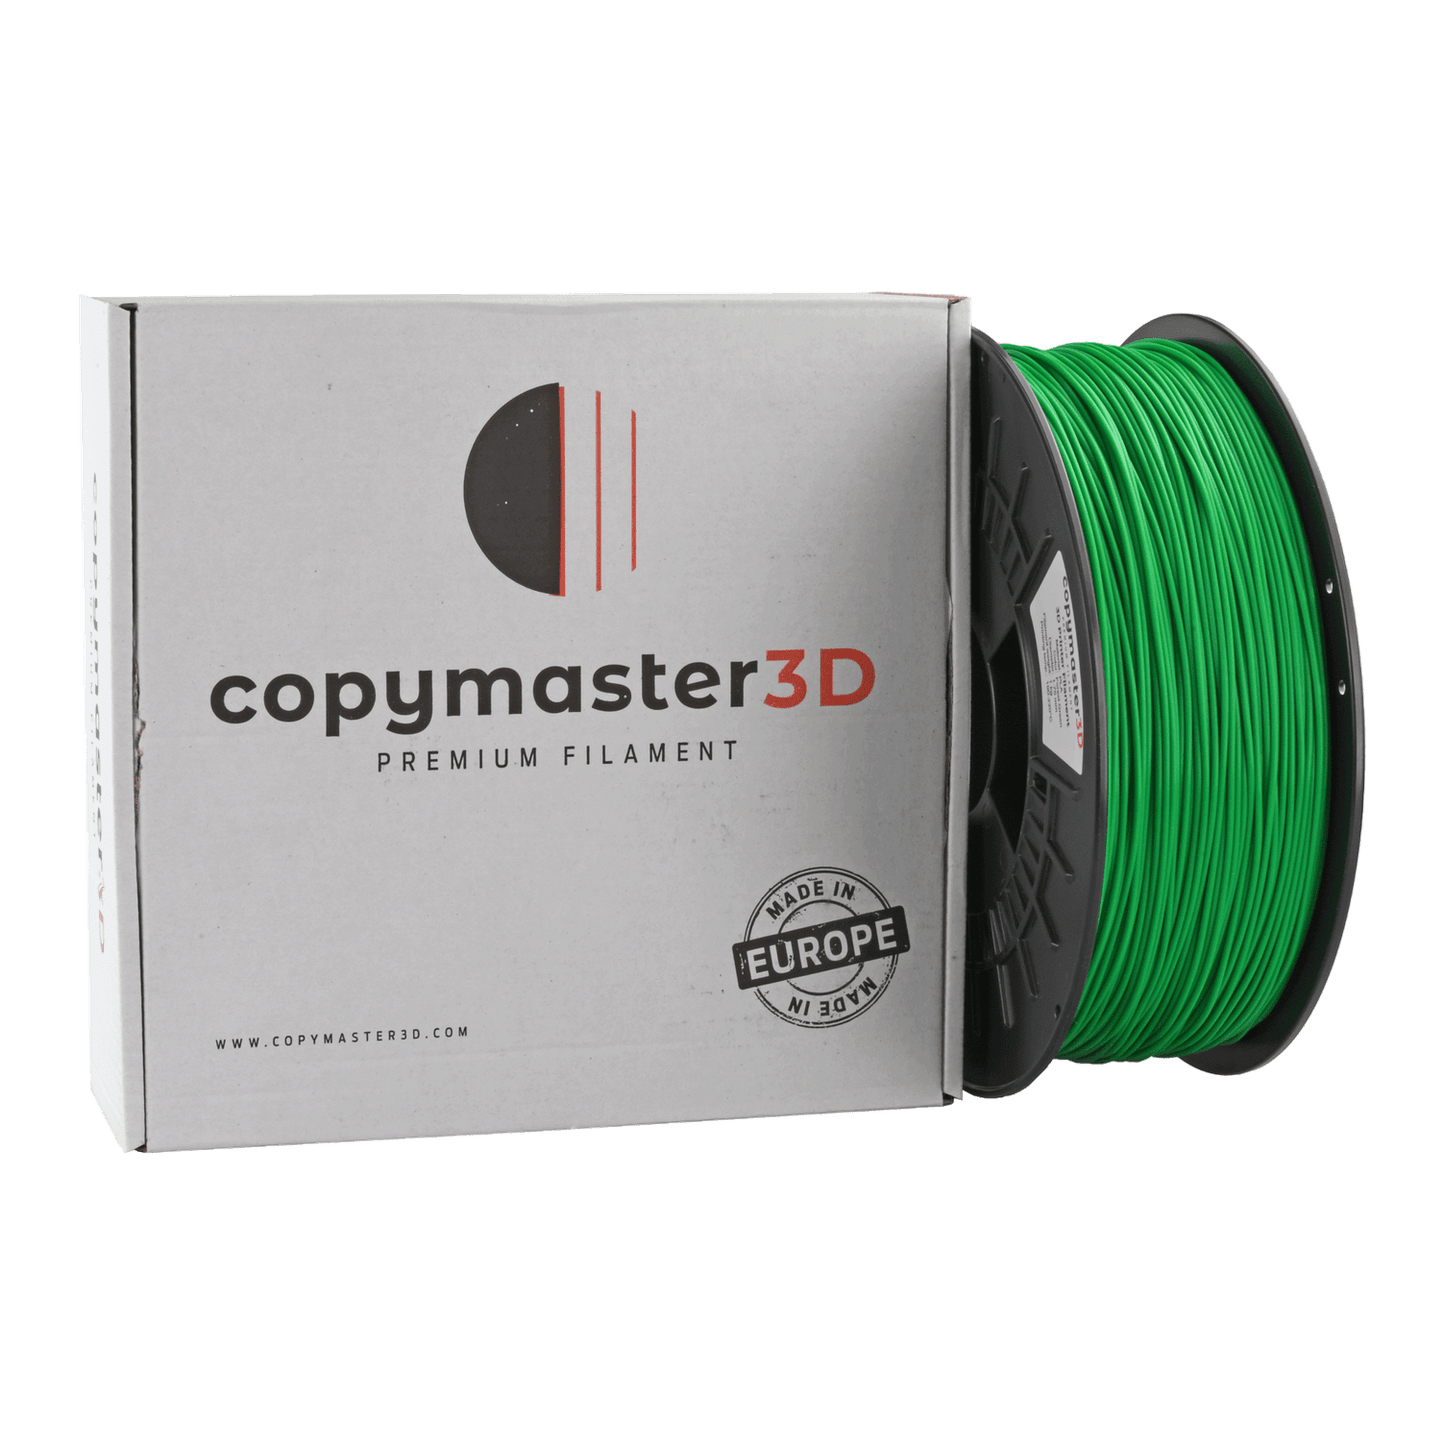 Copymaster3D Premium PLA Filament 1.75mm 1KG Forest Green